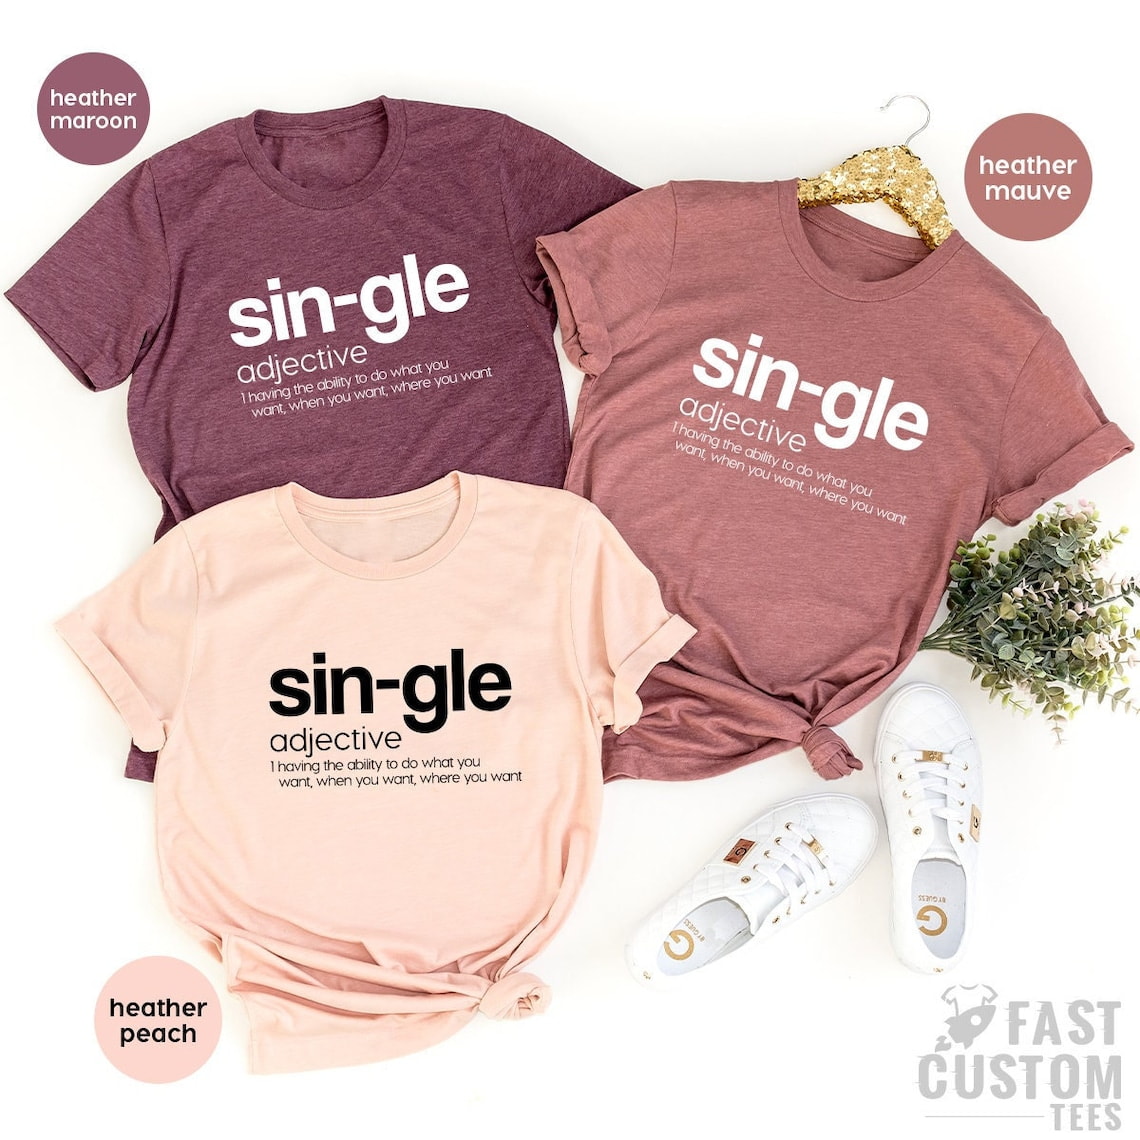 Single Dad Valentine Shirt, Sin-gle Adjective Shirt